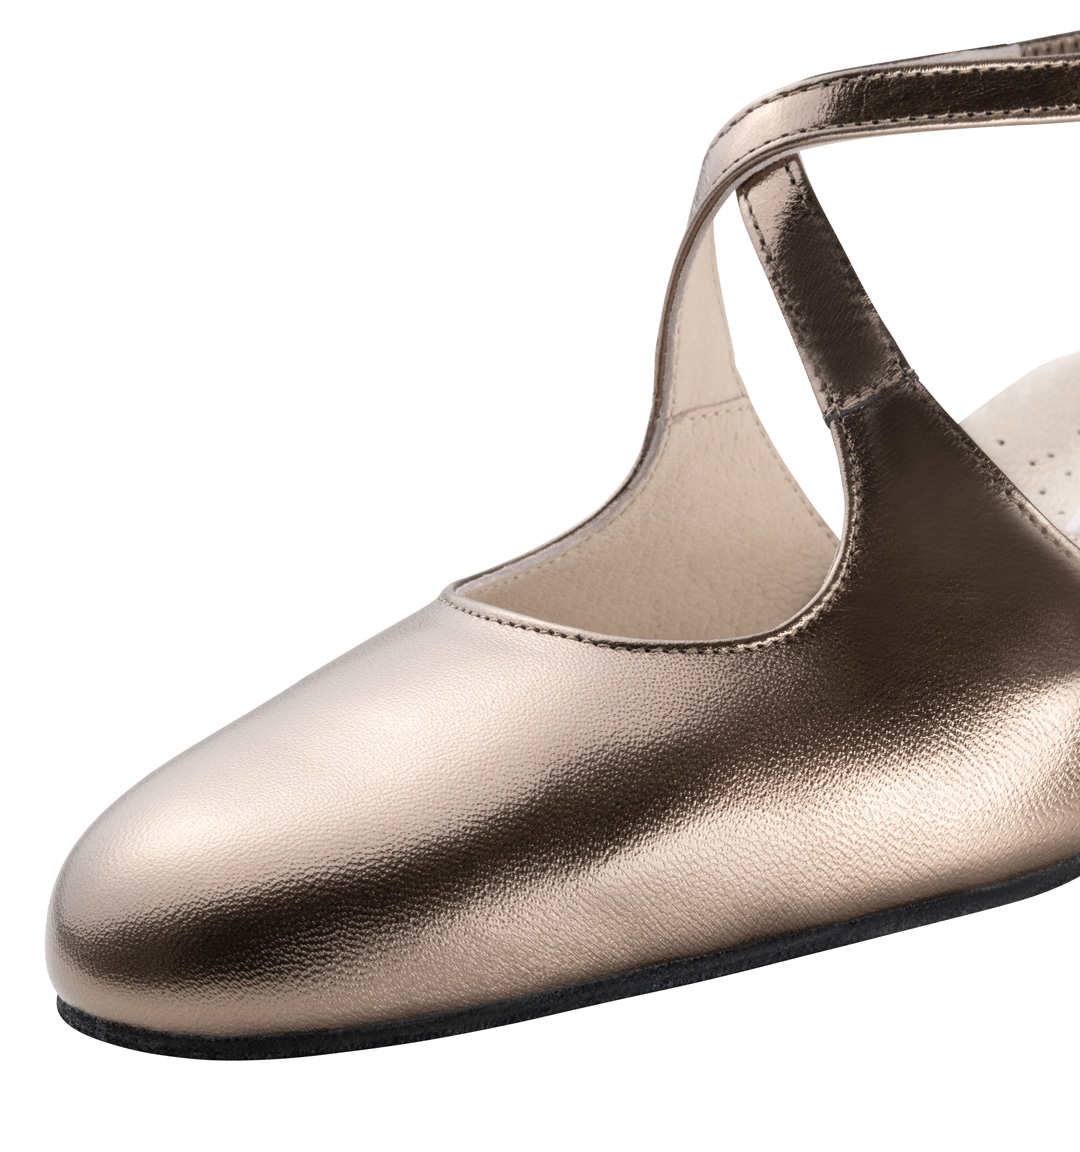 Detailed view of closed Werner Kern ladies' dance shoe